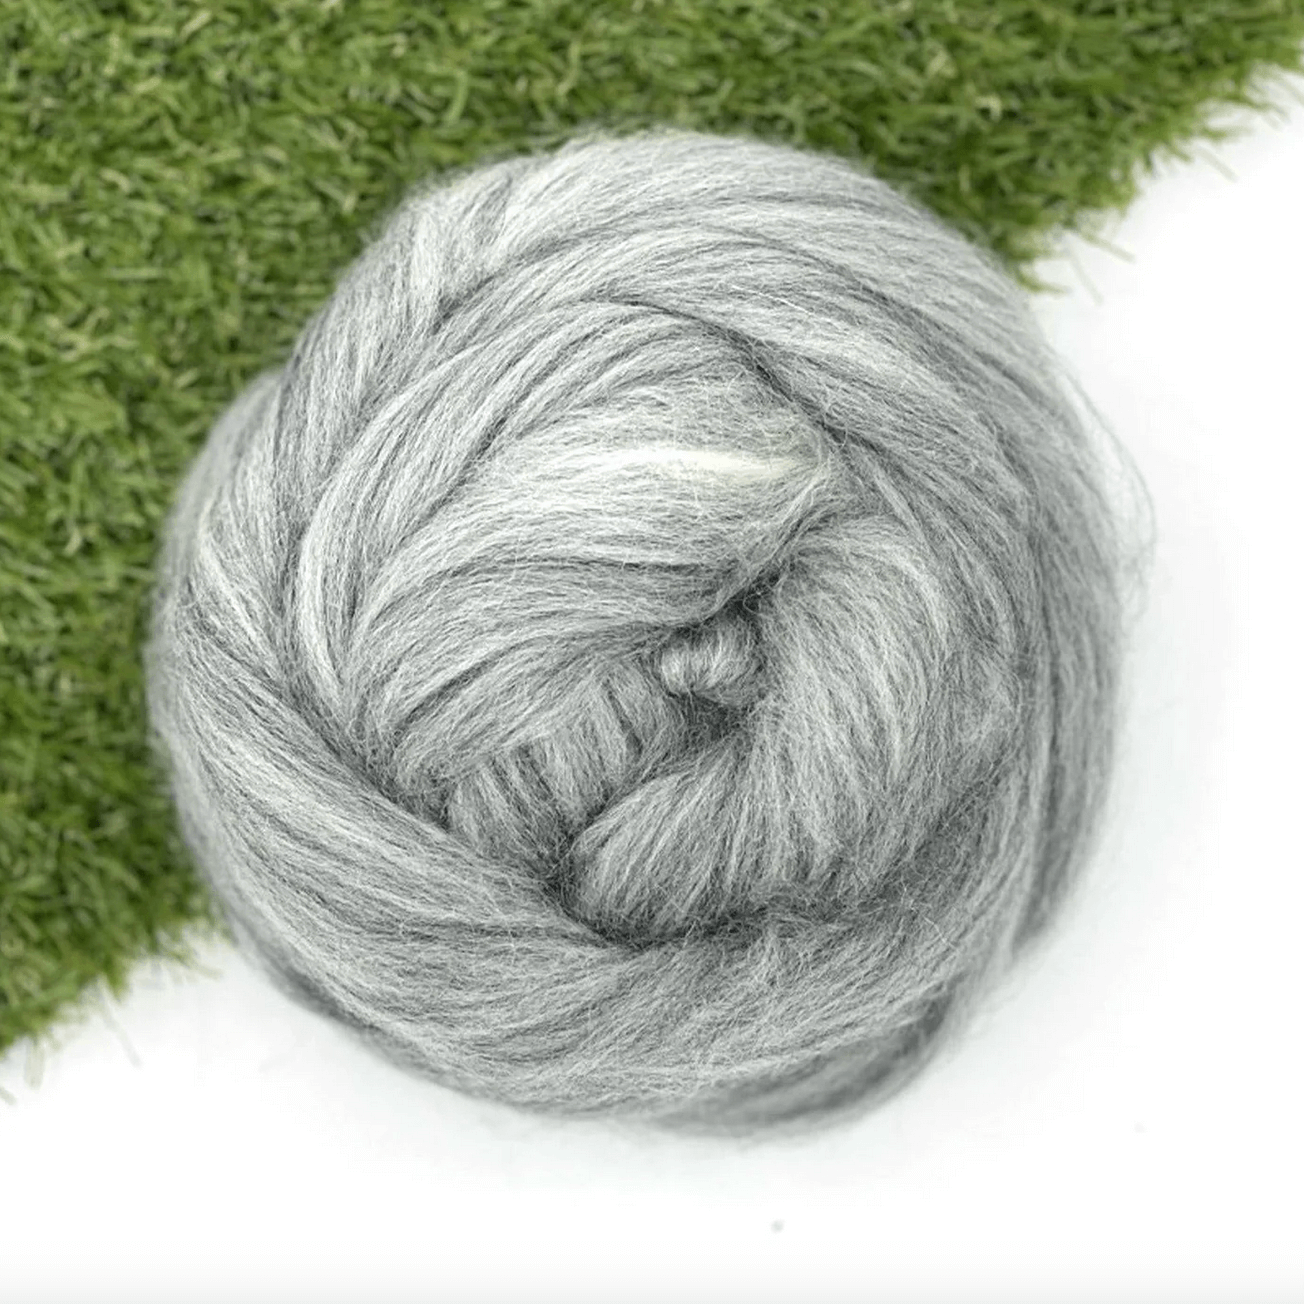 An unspun light grey BFL top for spinning, felting, dyeing, weaving